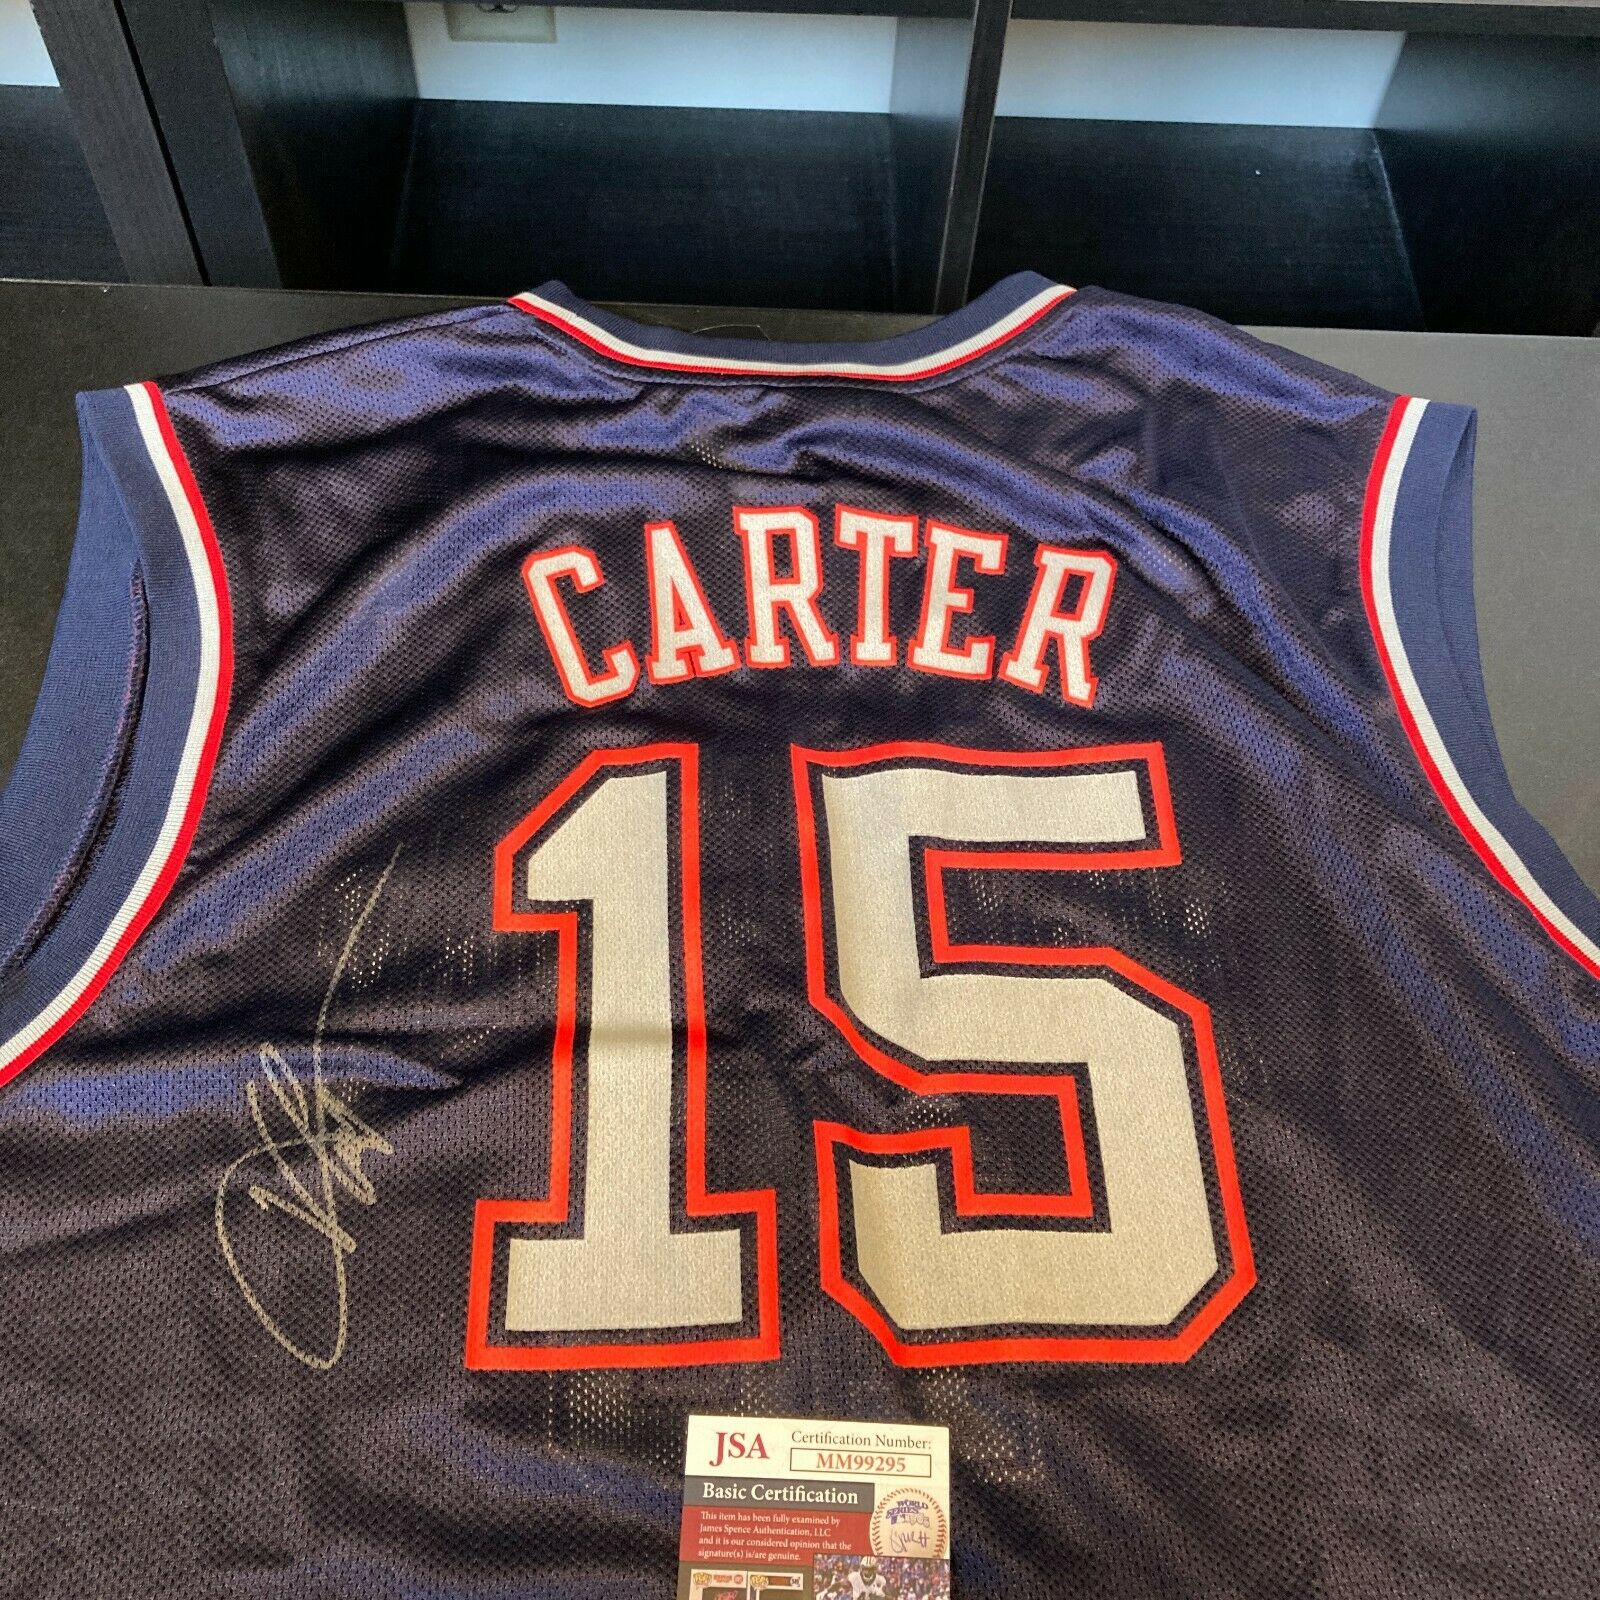 Vince Carter Signed Authentic Nike Toronto Raptors Jersey With JSA